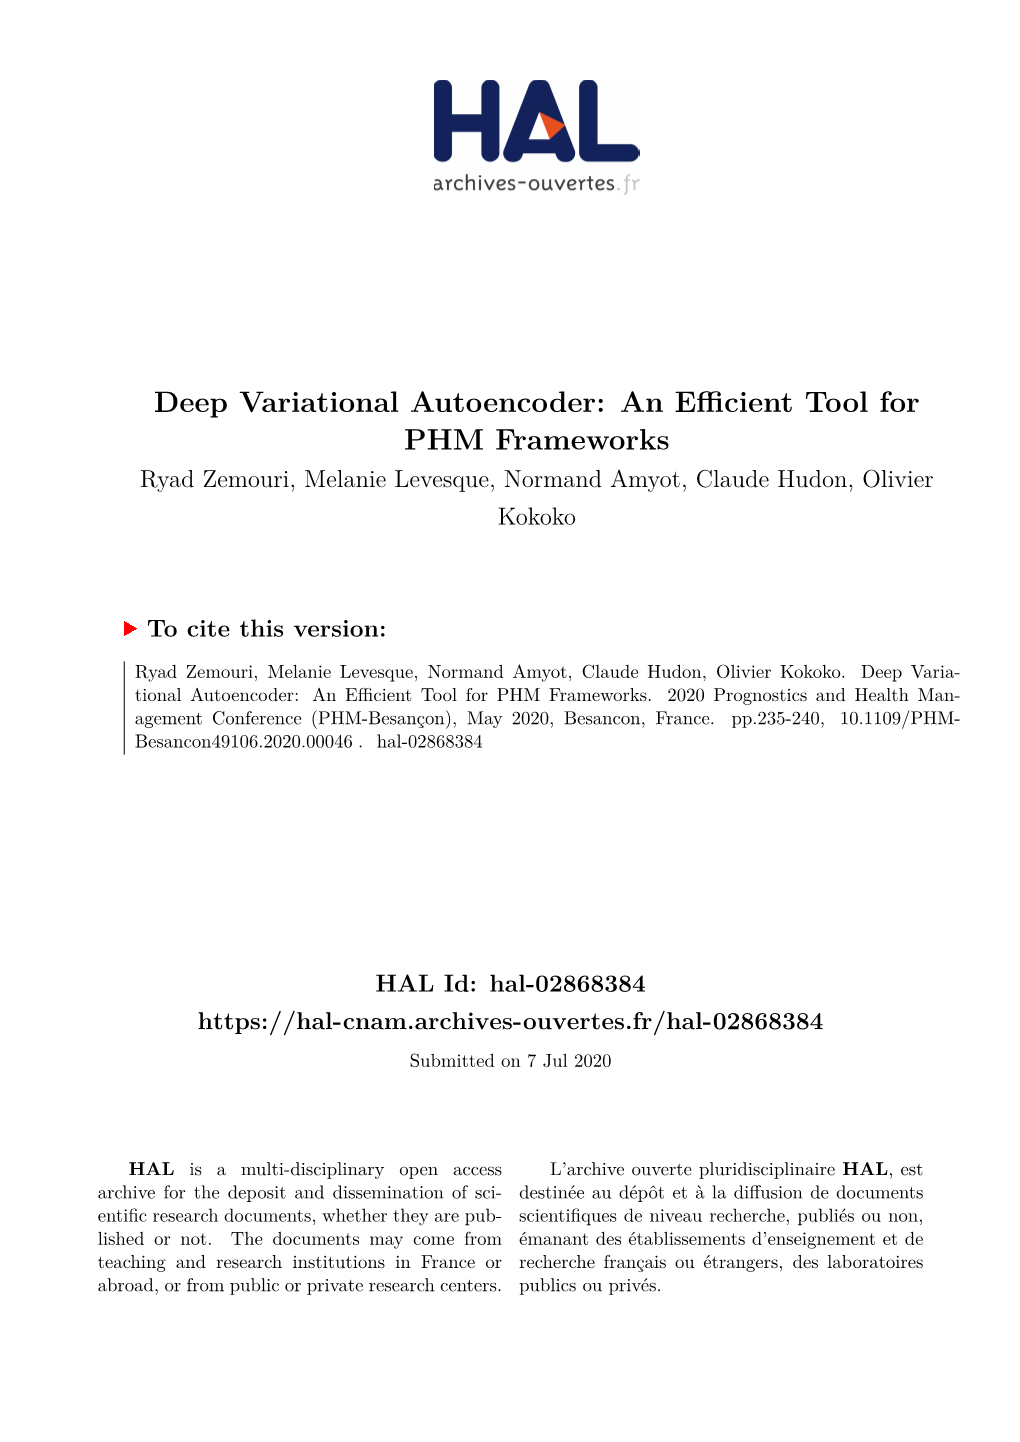 Deep Variational Autoencoder: an Efficient Tool for PHM Frameworks